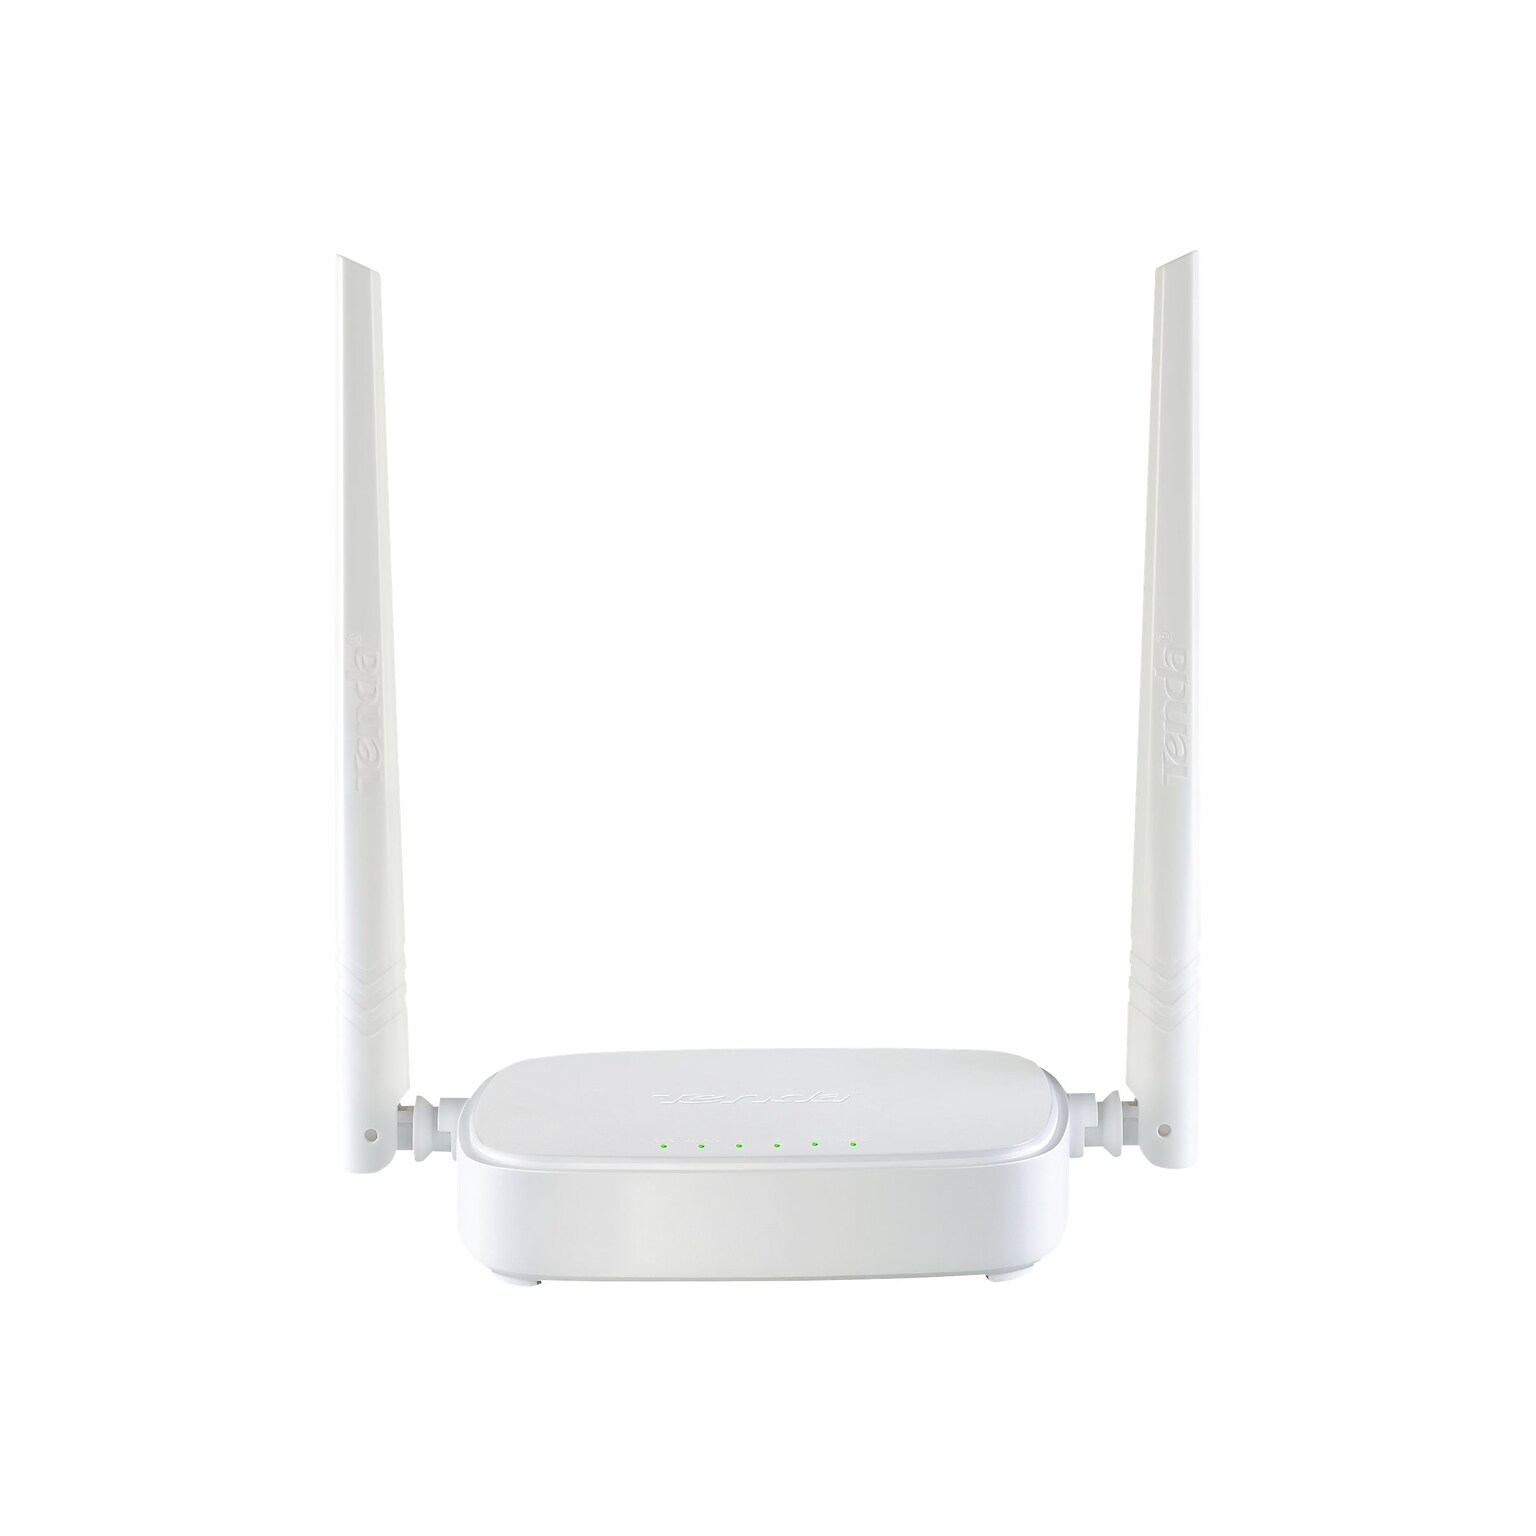 Tenda N301 Wireless N300 Easy Setup Router, White | Quill.com